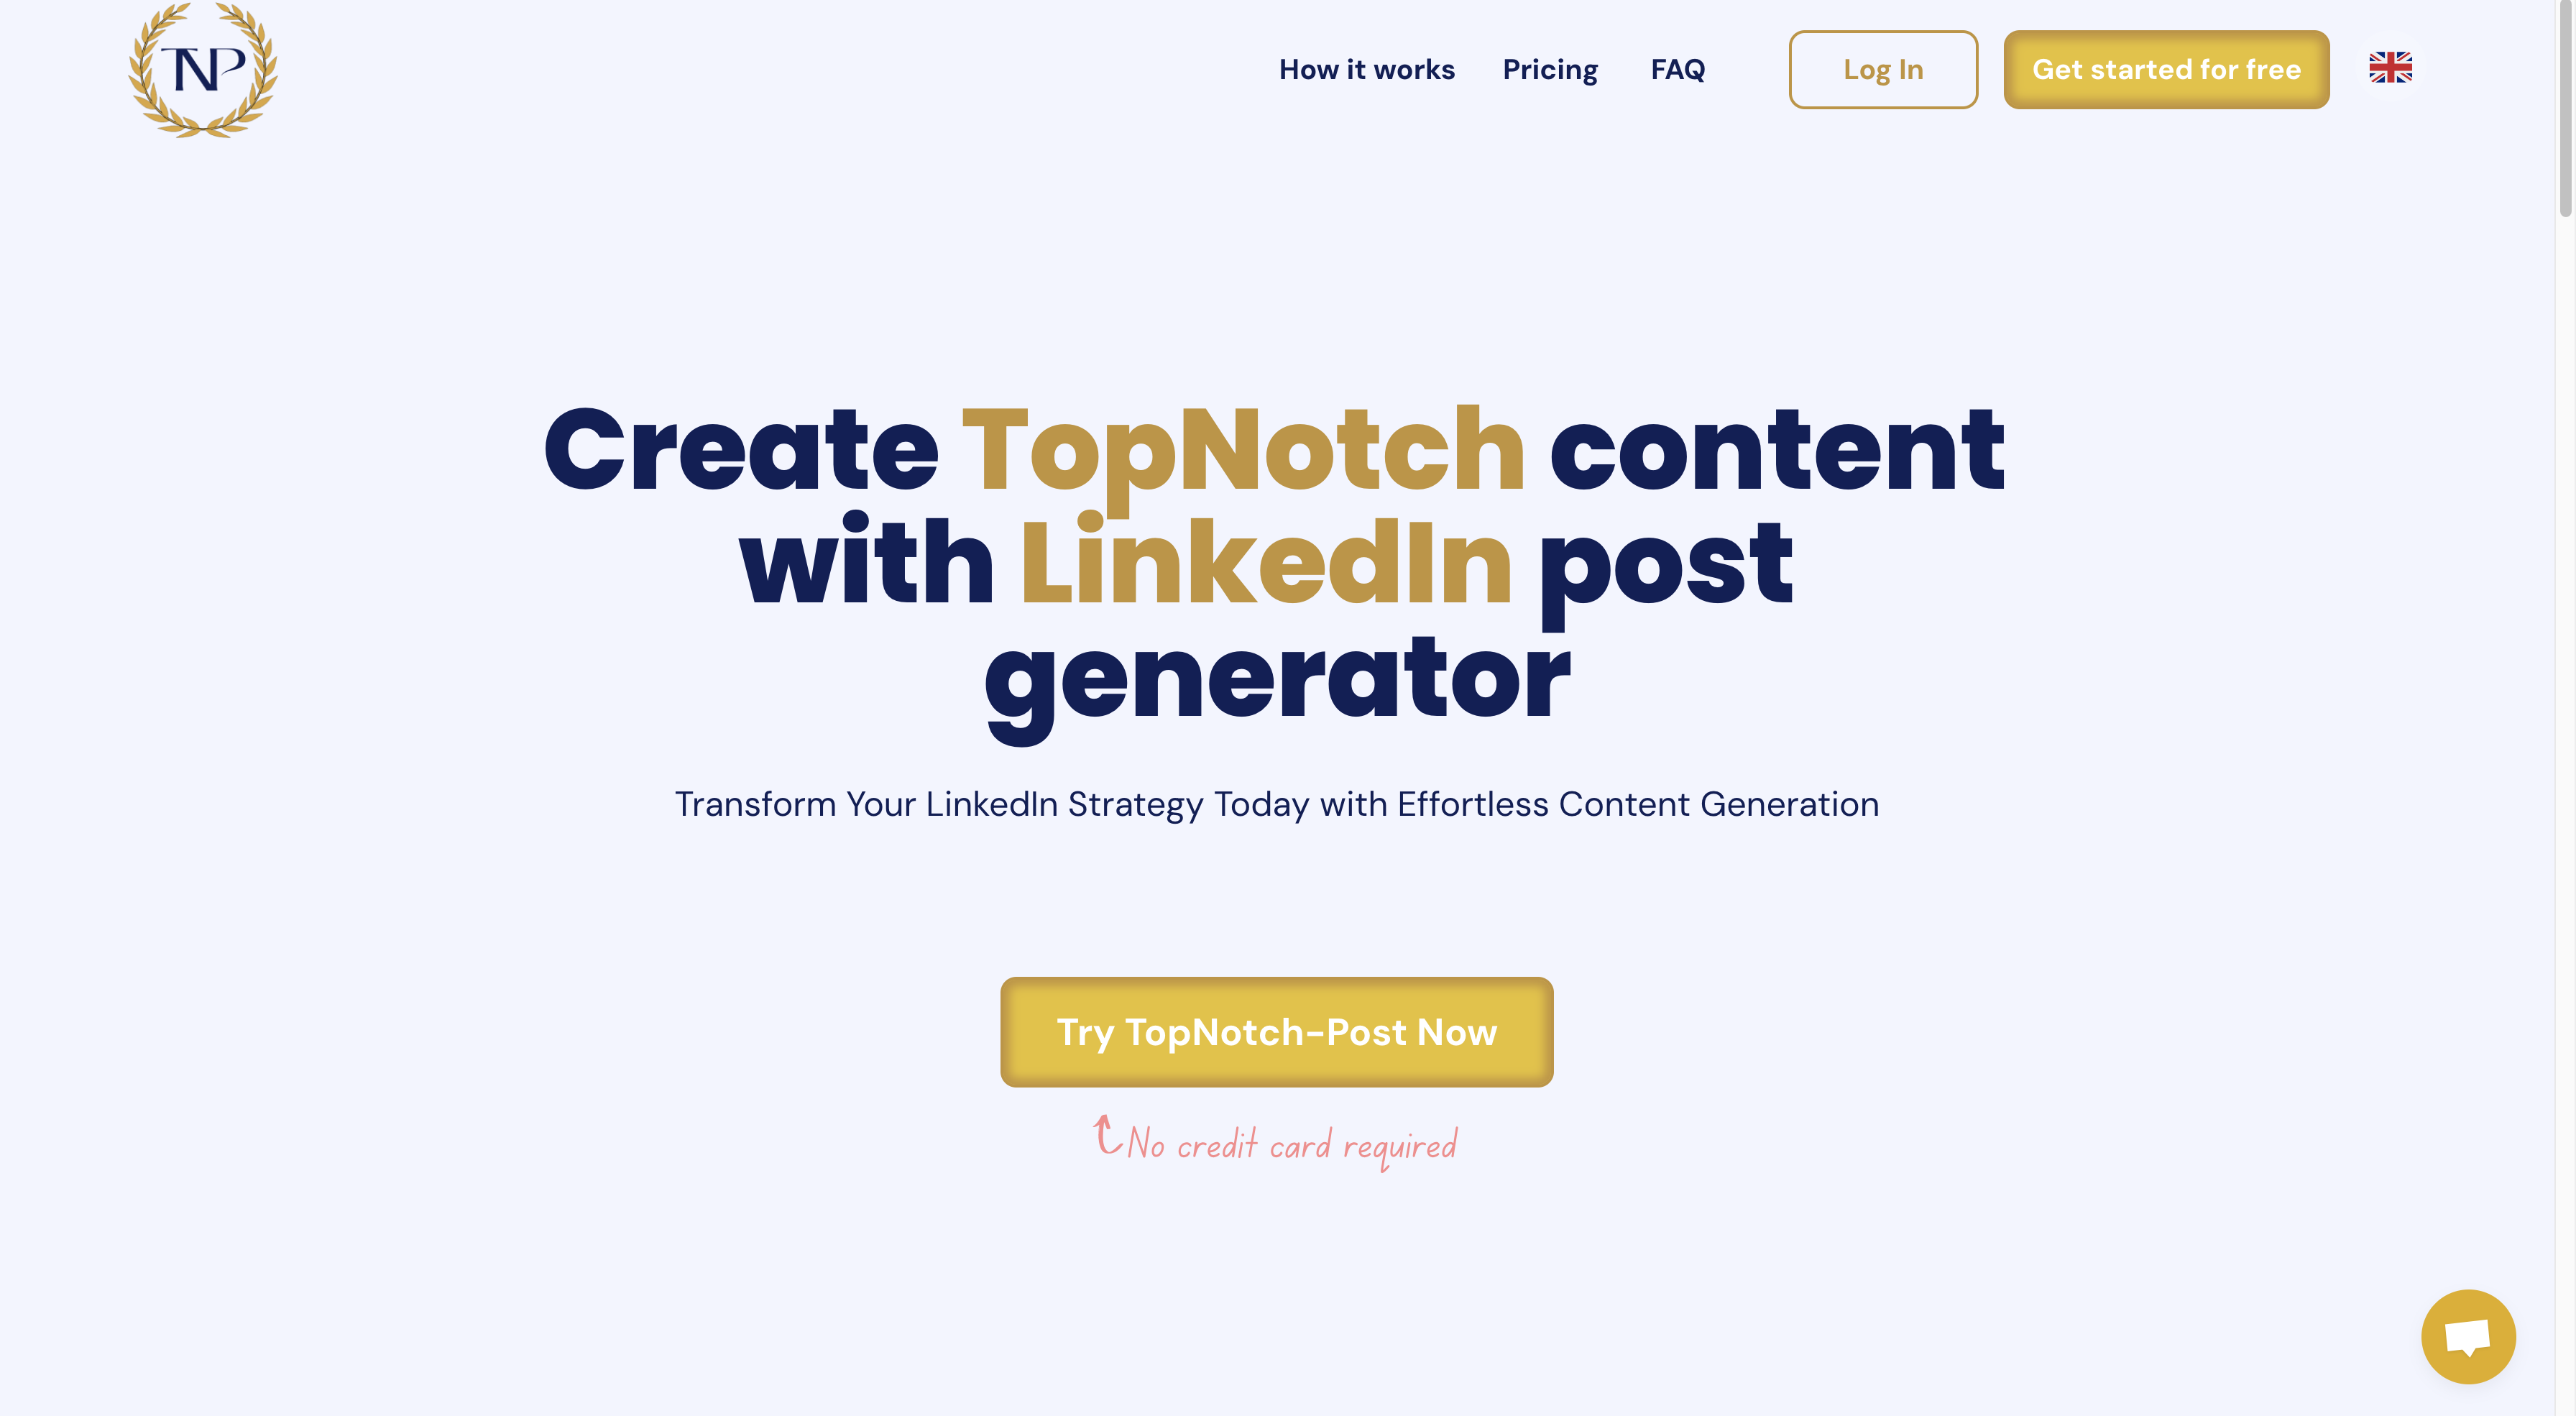 TopNotch-Post Landing page